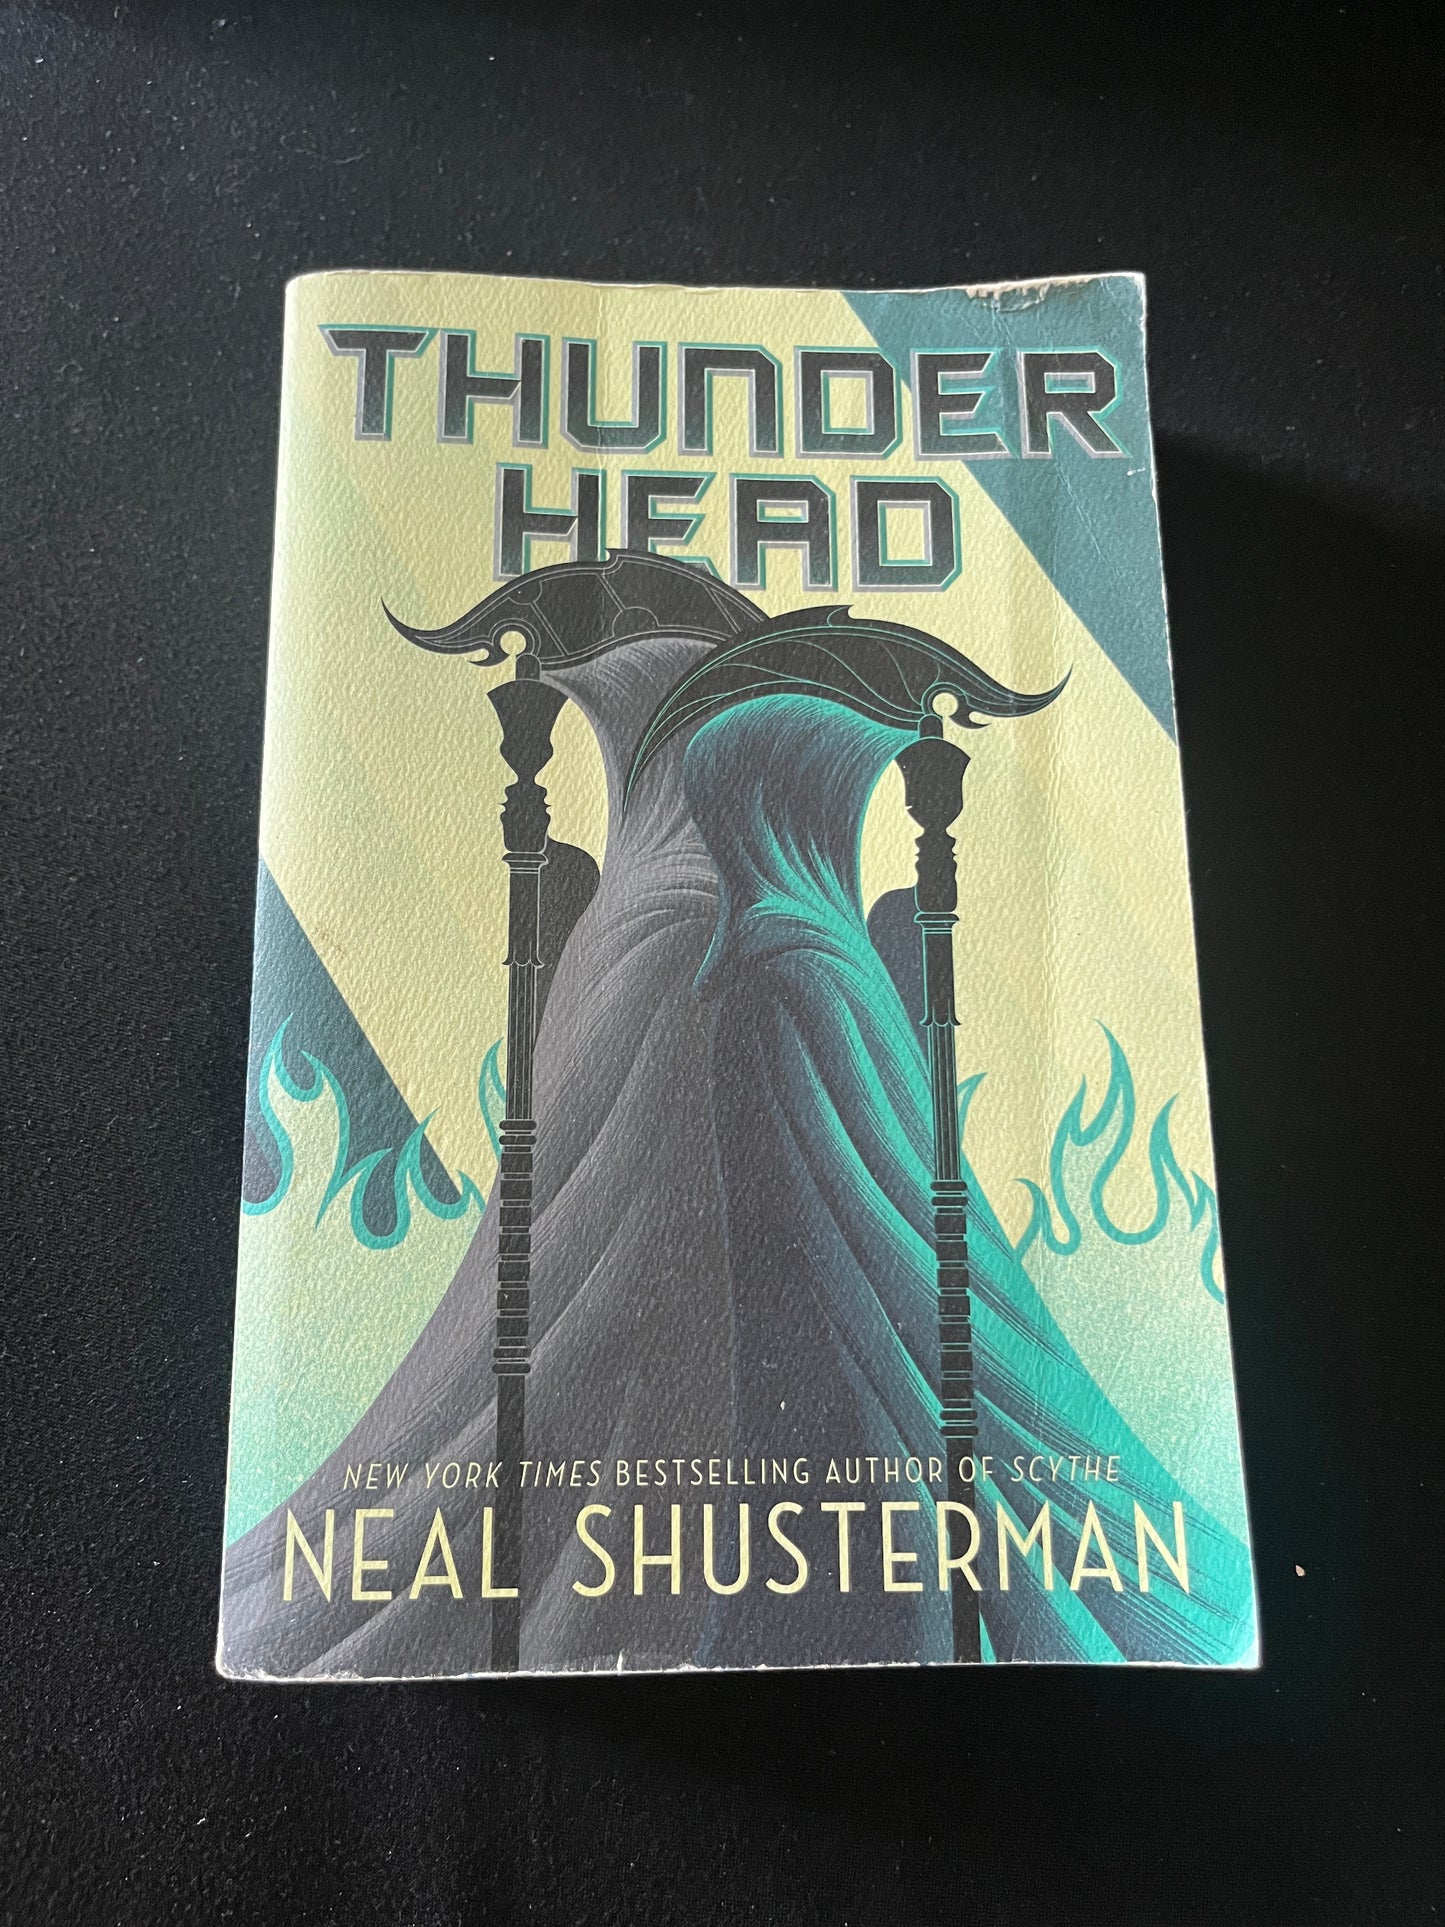 THUNDERHEAD by Neal Shusterman